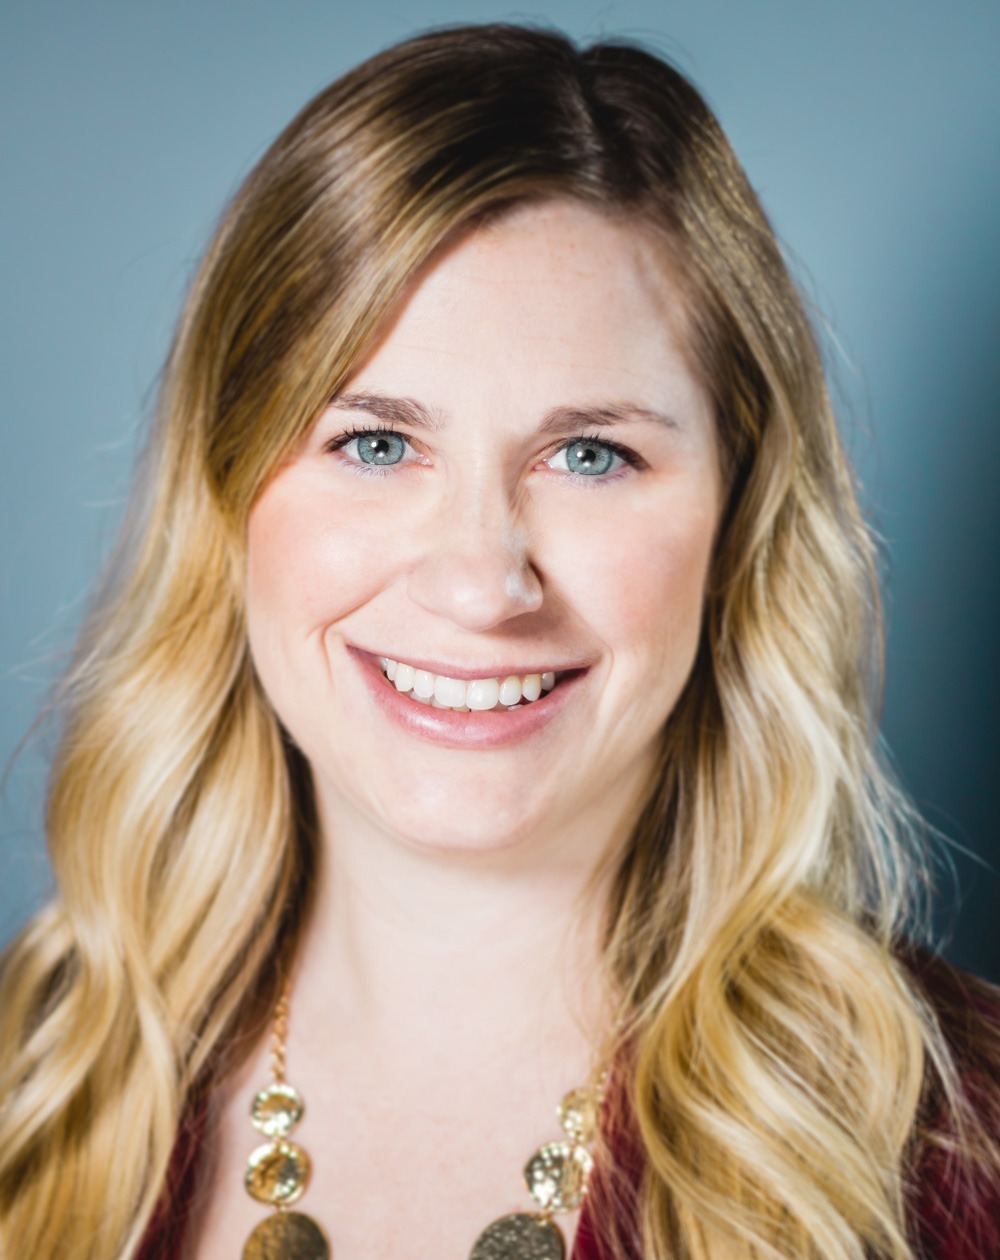 Amber Welch, director of digital content for Ochsner Health System